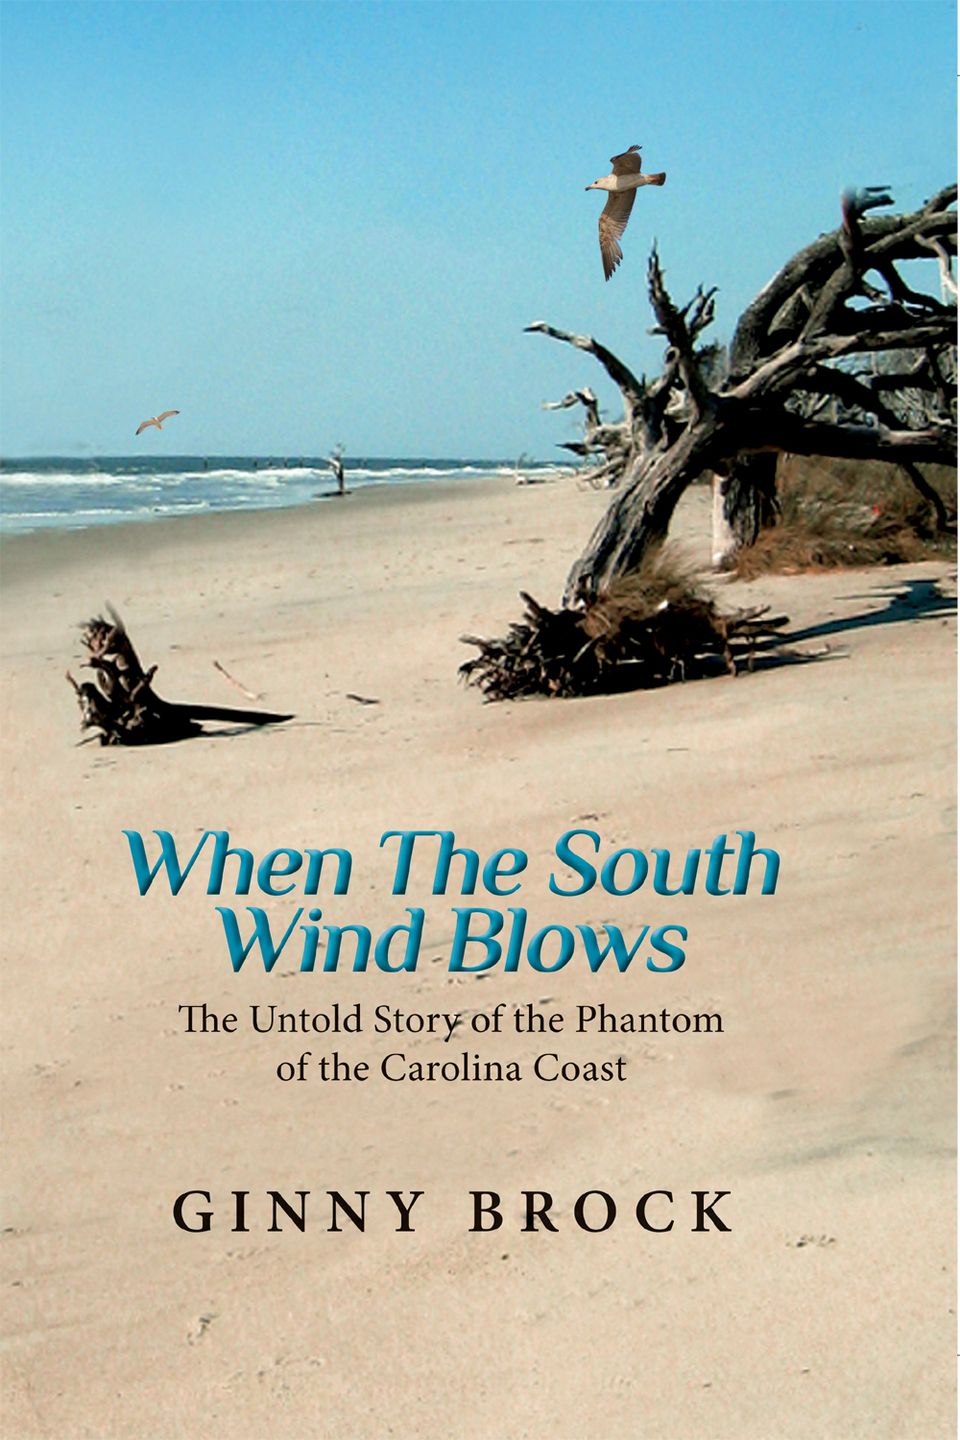 South wind cover 1000 pix long side copy (1) (2)